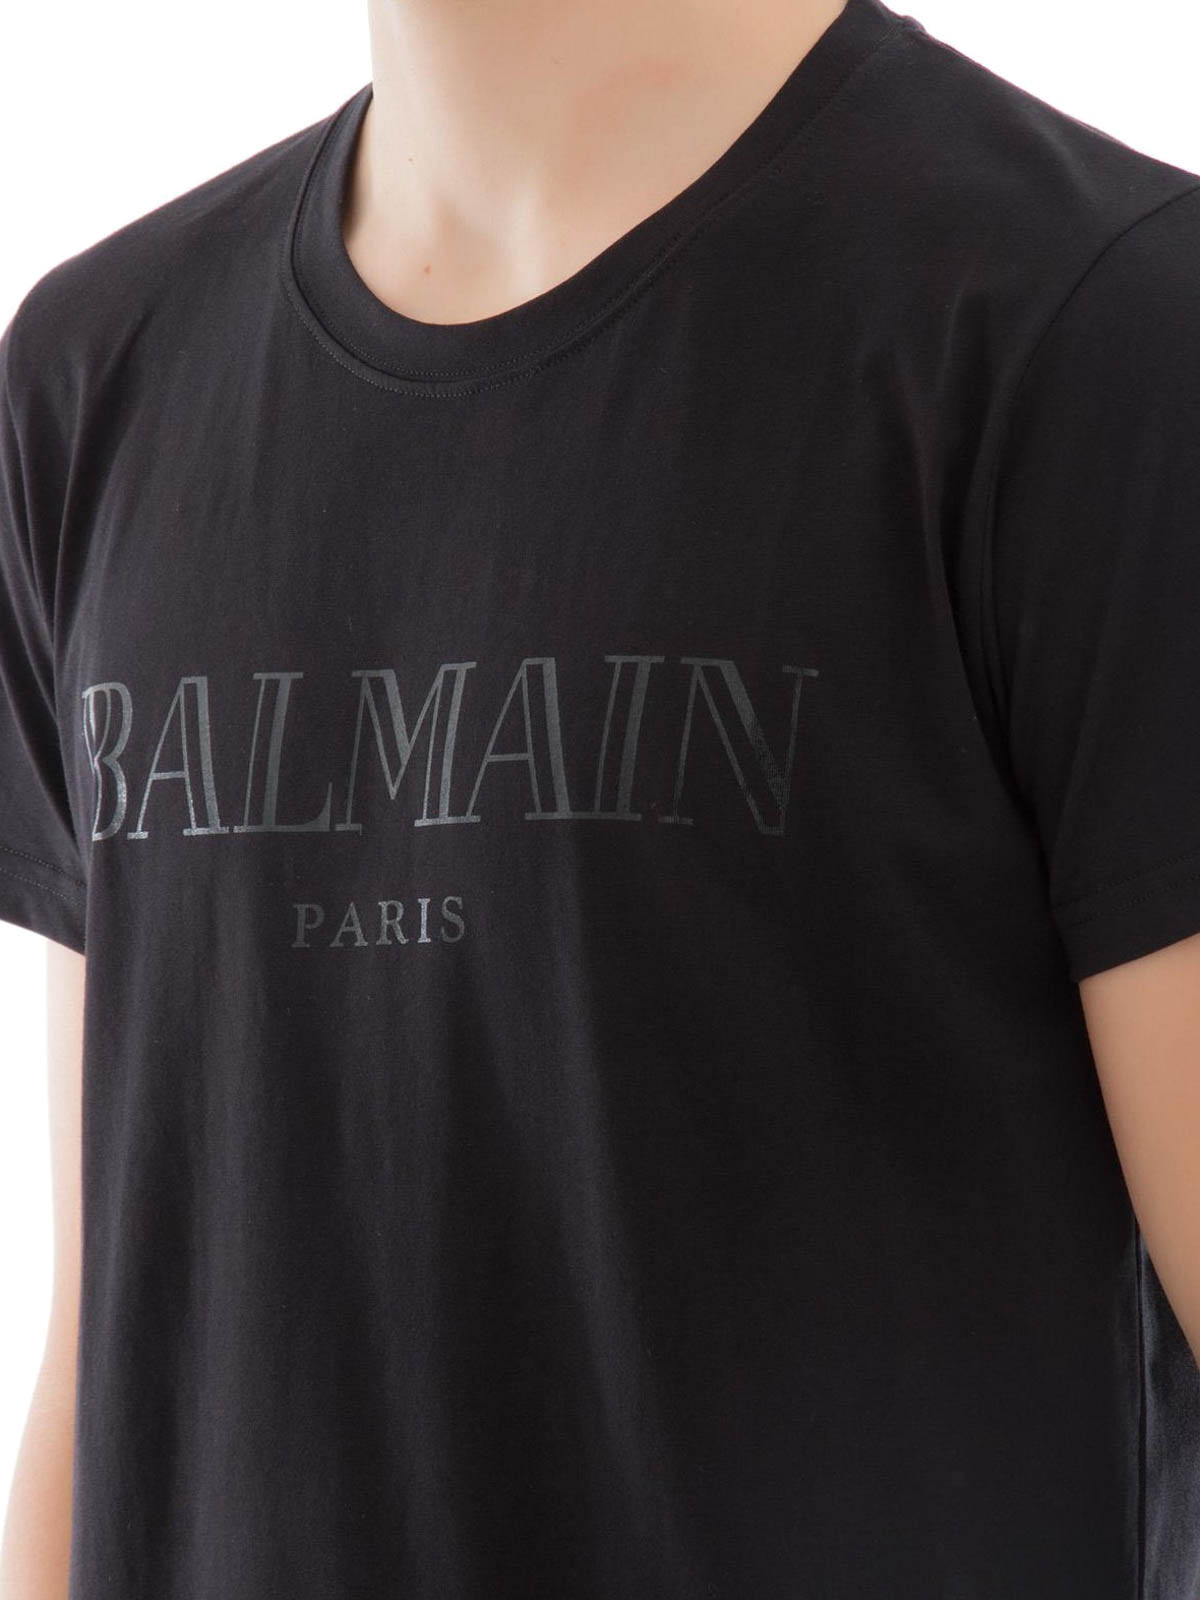 Balmain Shirt Black Shop, 55% OFF | www.emanagreen.com